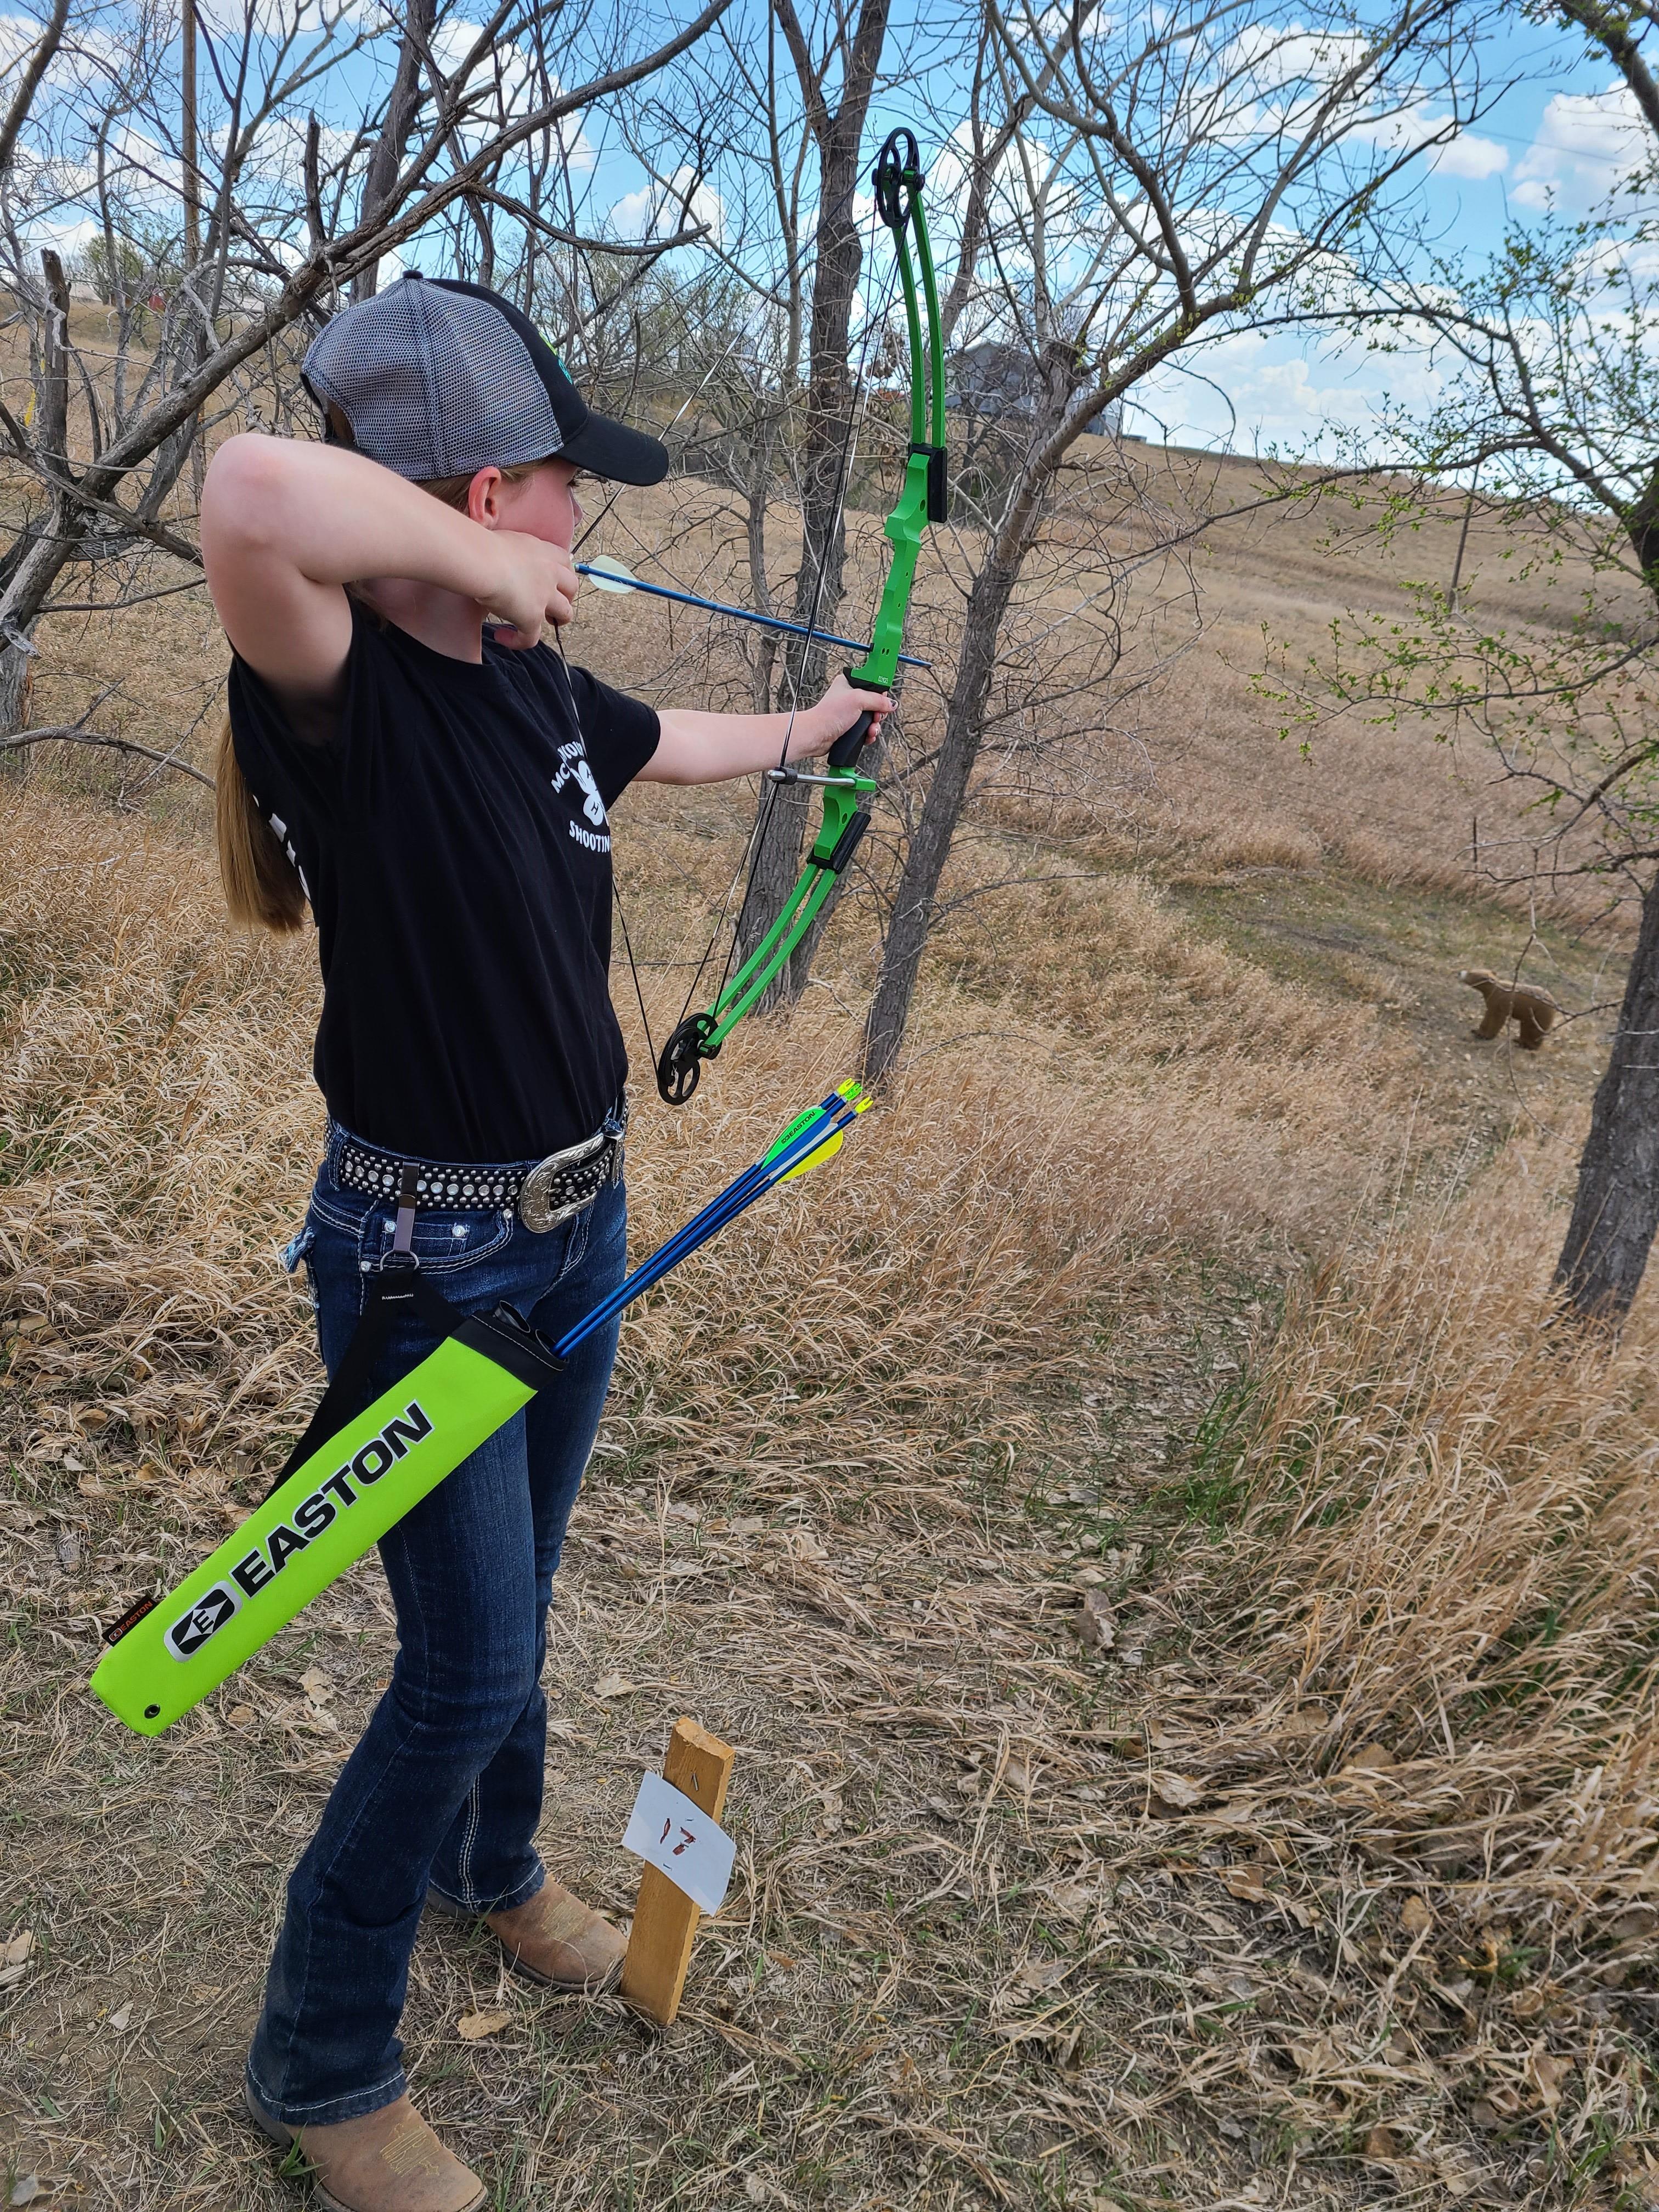 A youth takes a shot at the 4-H state archery match at the North Dakota 4-H Camp near Washburn. (NDSU photo)